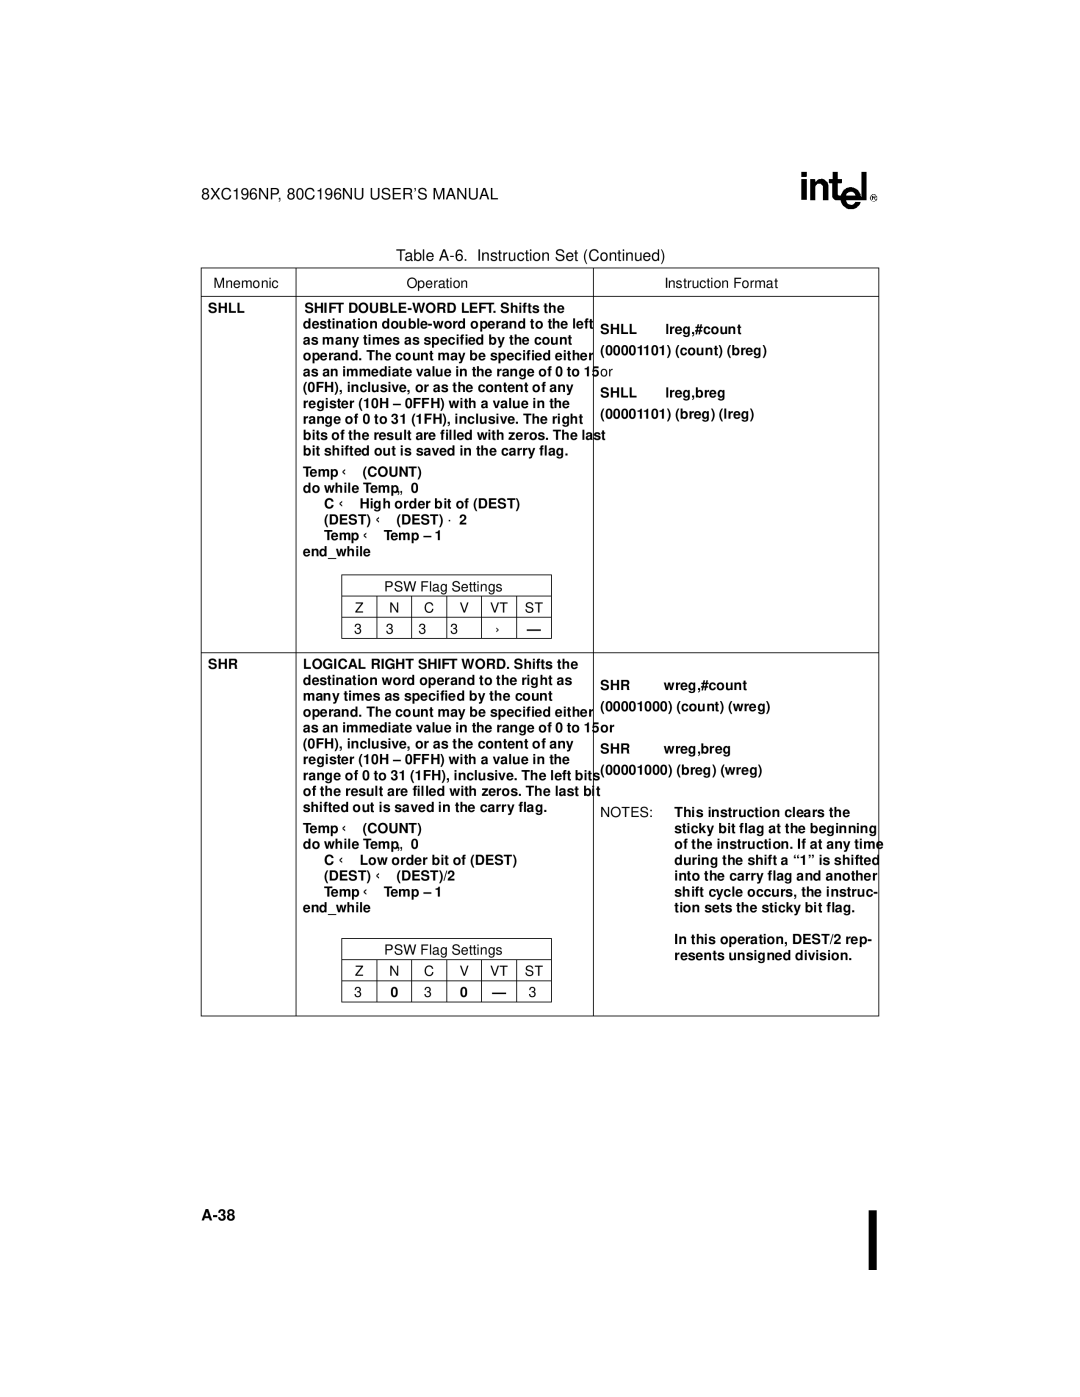 Intel 8XC196NP, 80C196NU, Microcontroller manual Shll, Shr 